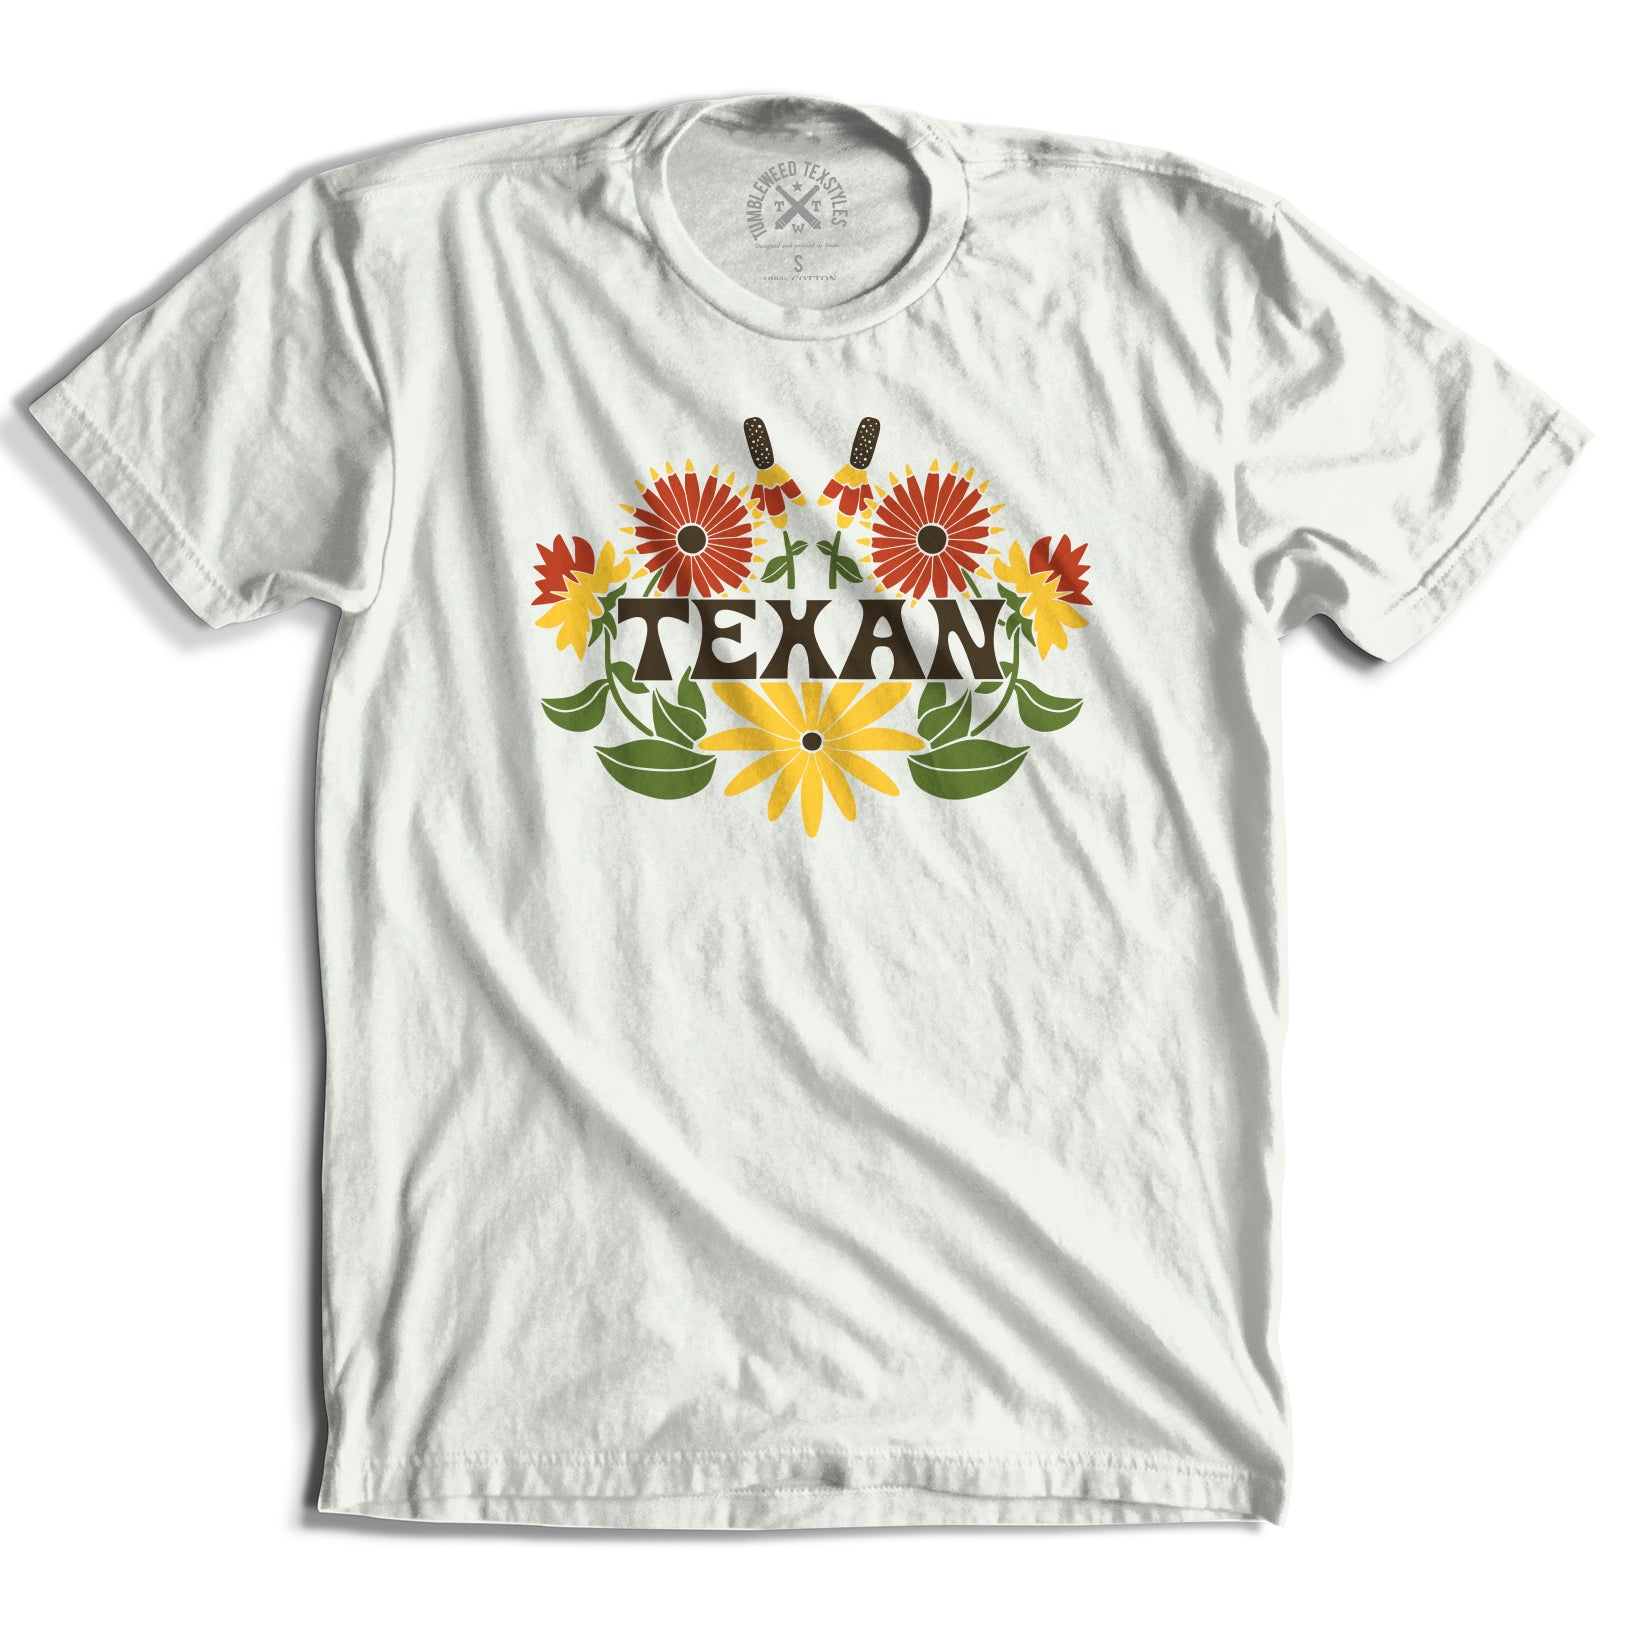 Texan Wildflowers T-Shirt